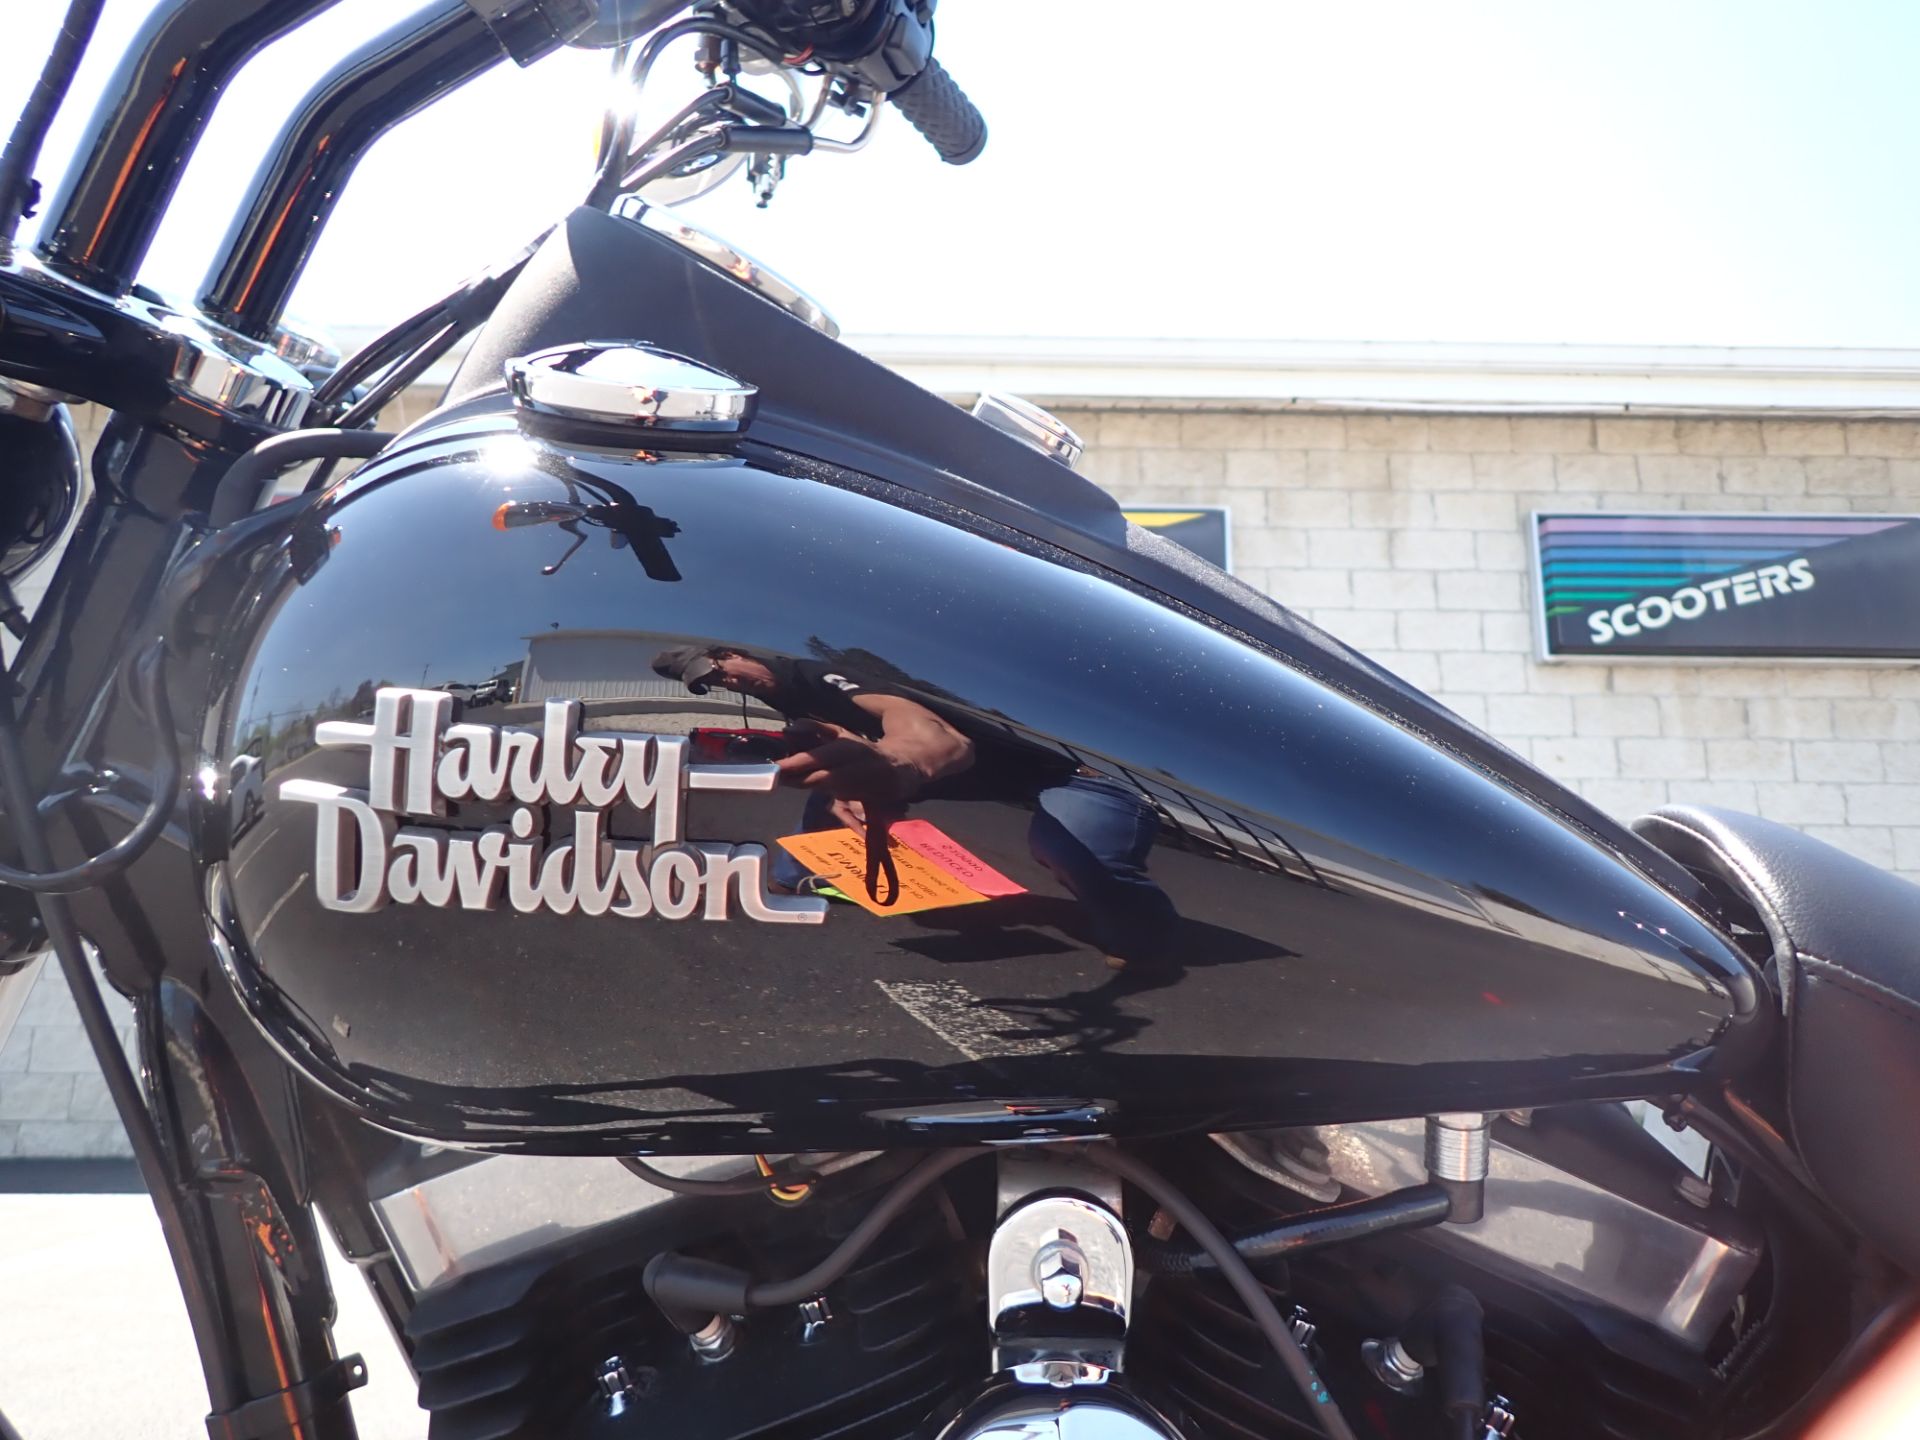 2013 Harley-Davidson Dyna® Street Bob® in Massillon, Ohio - Photo 10